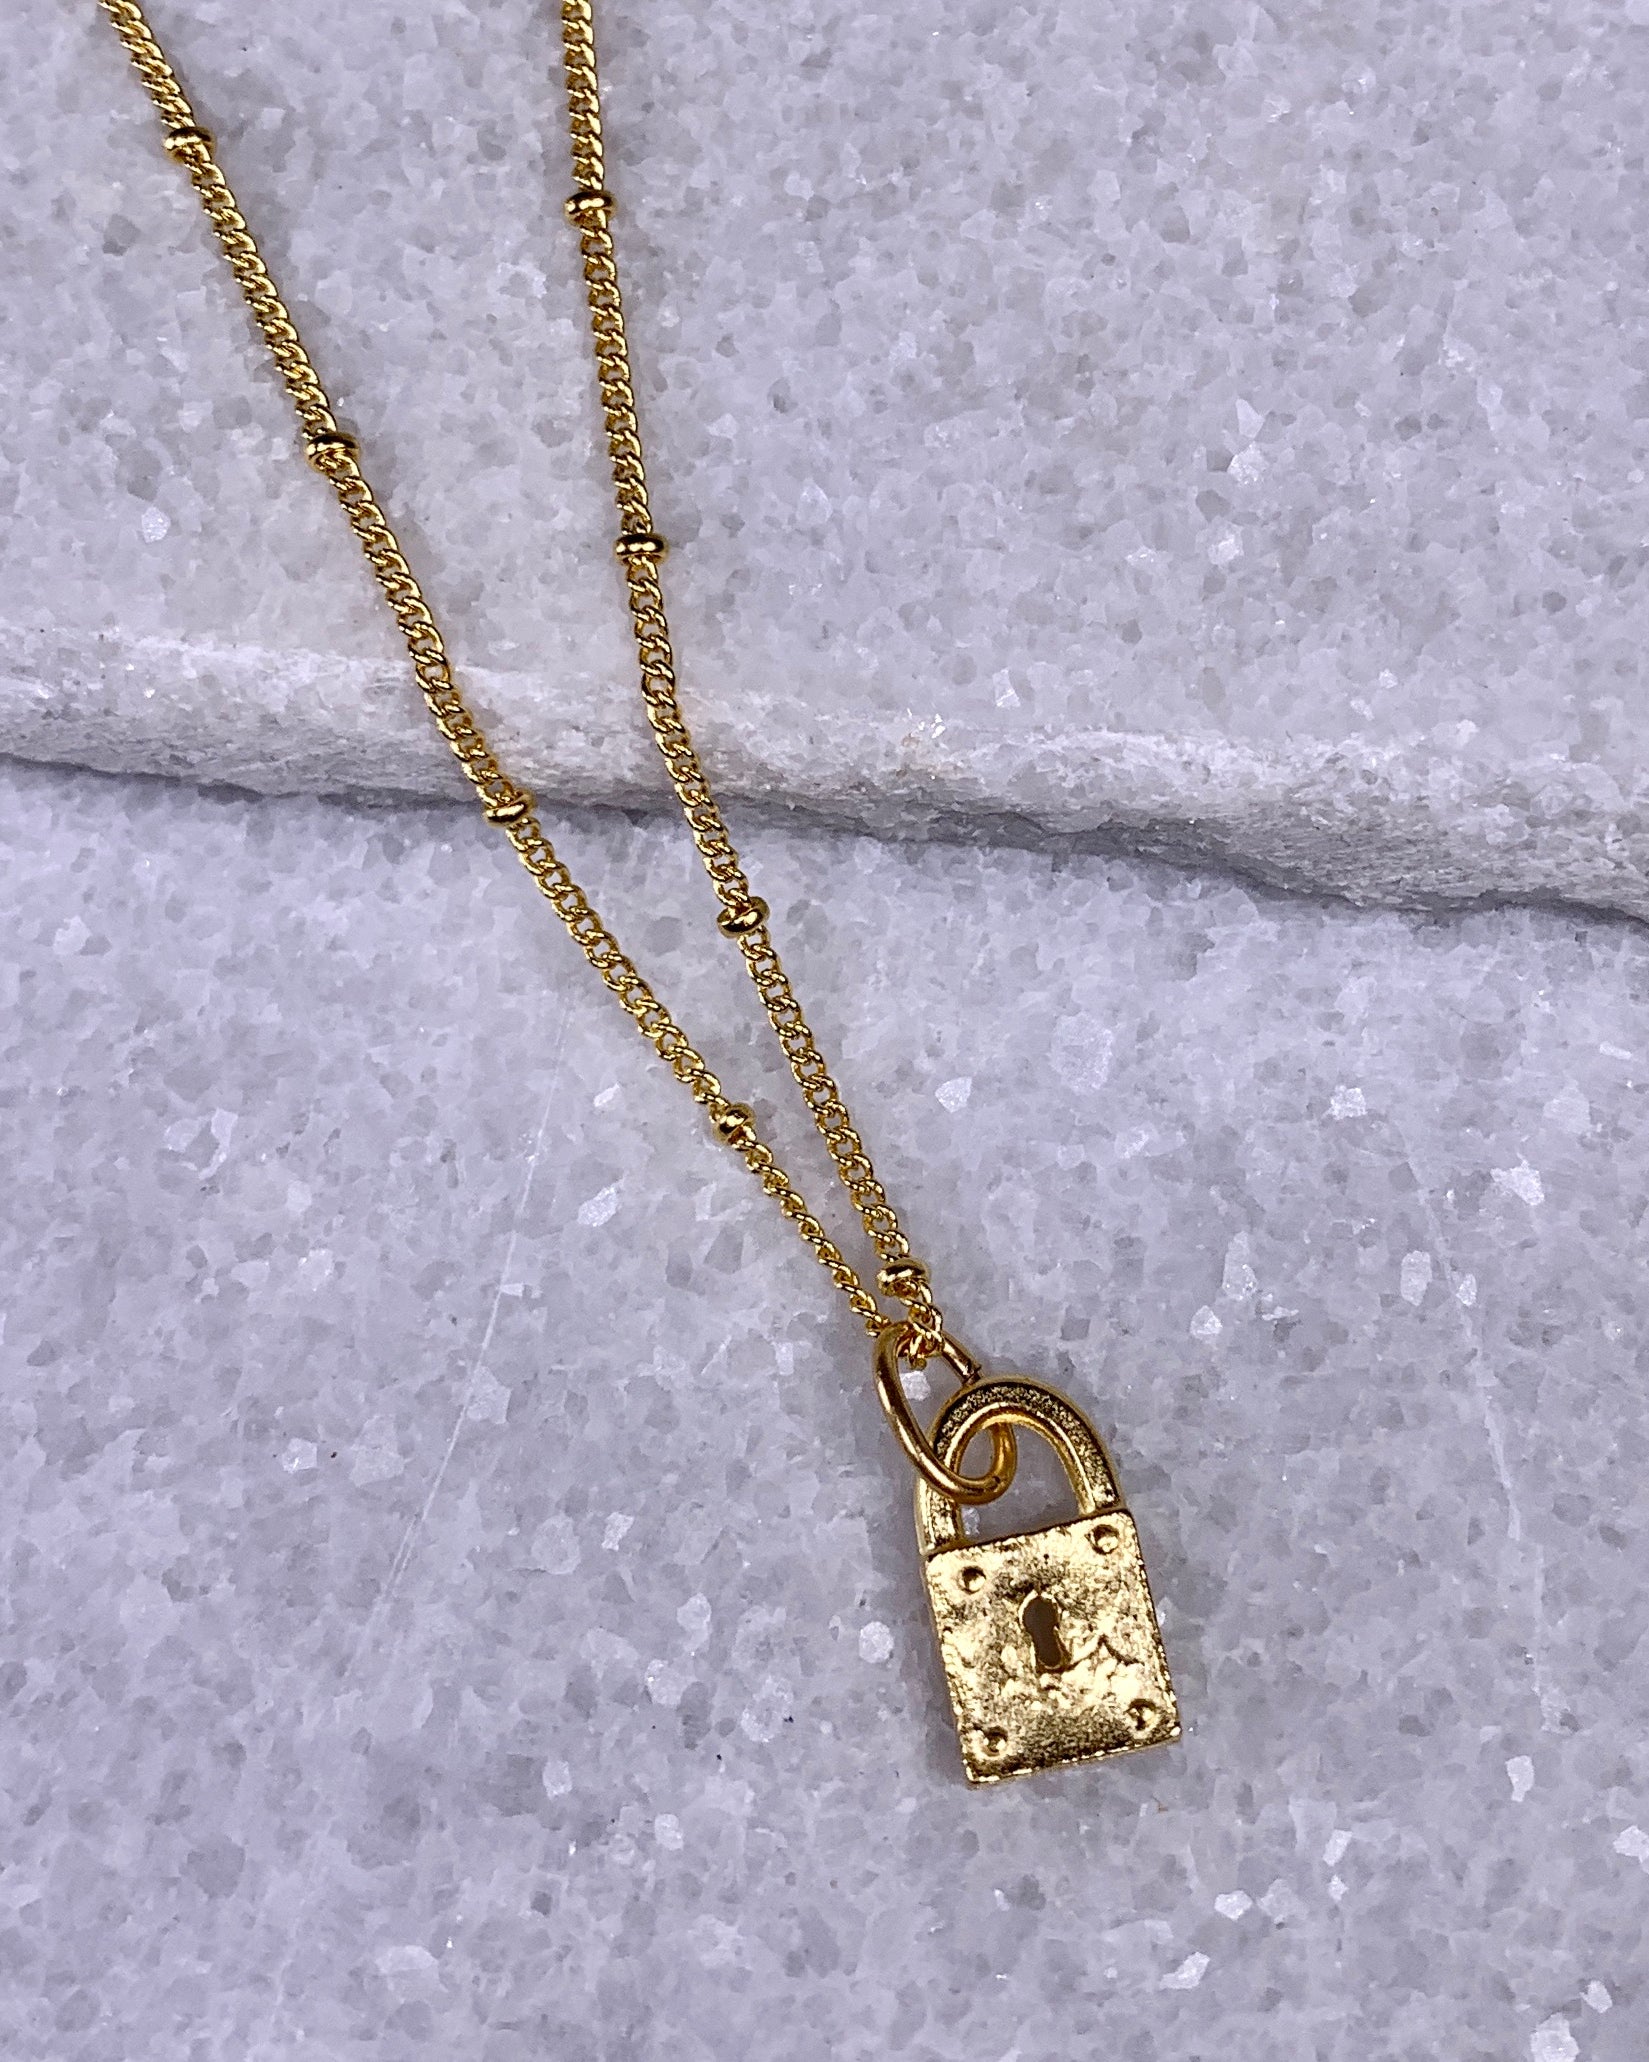 Susan Shaw Tiny Gold Lock Necklace.